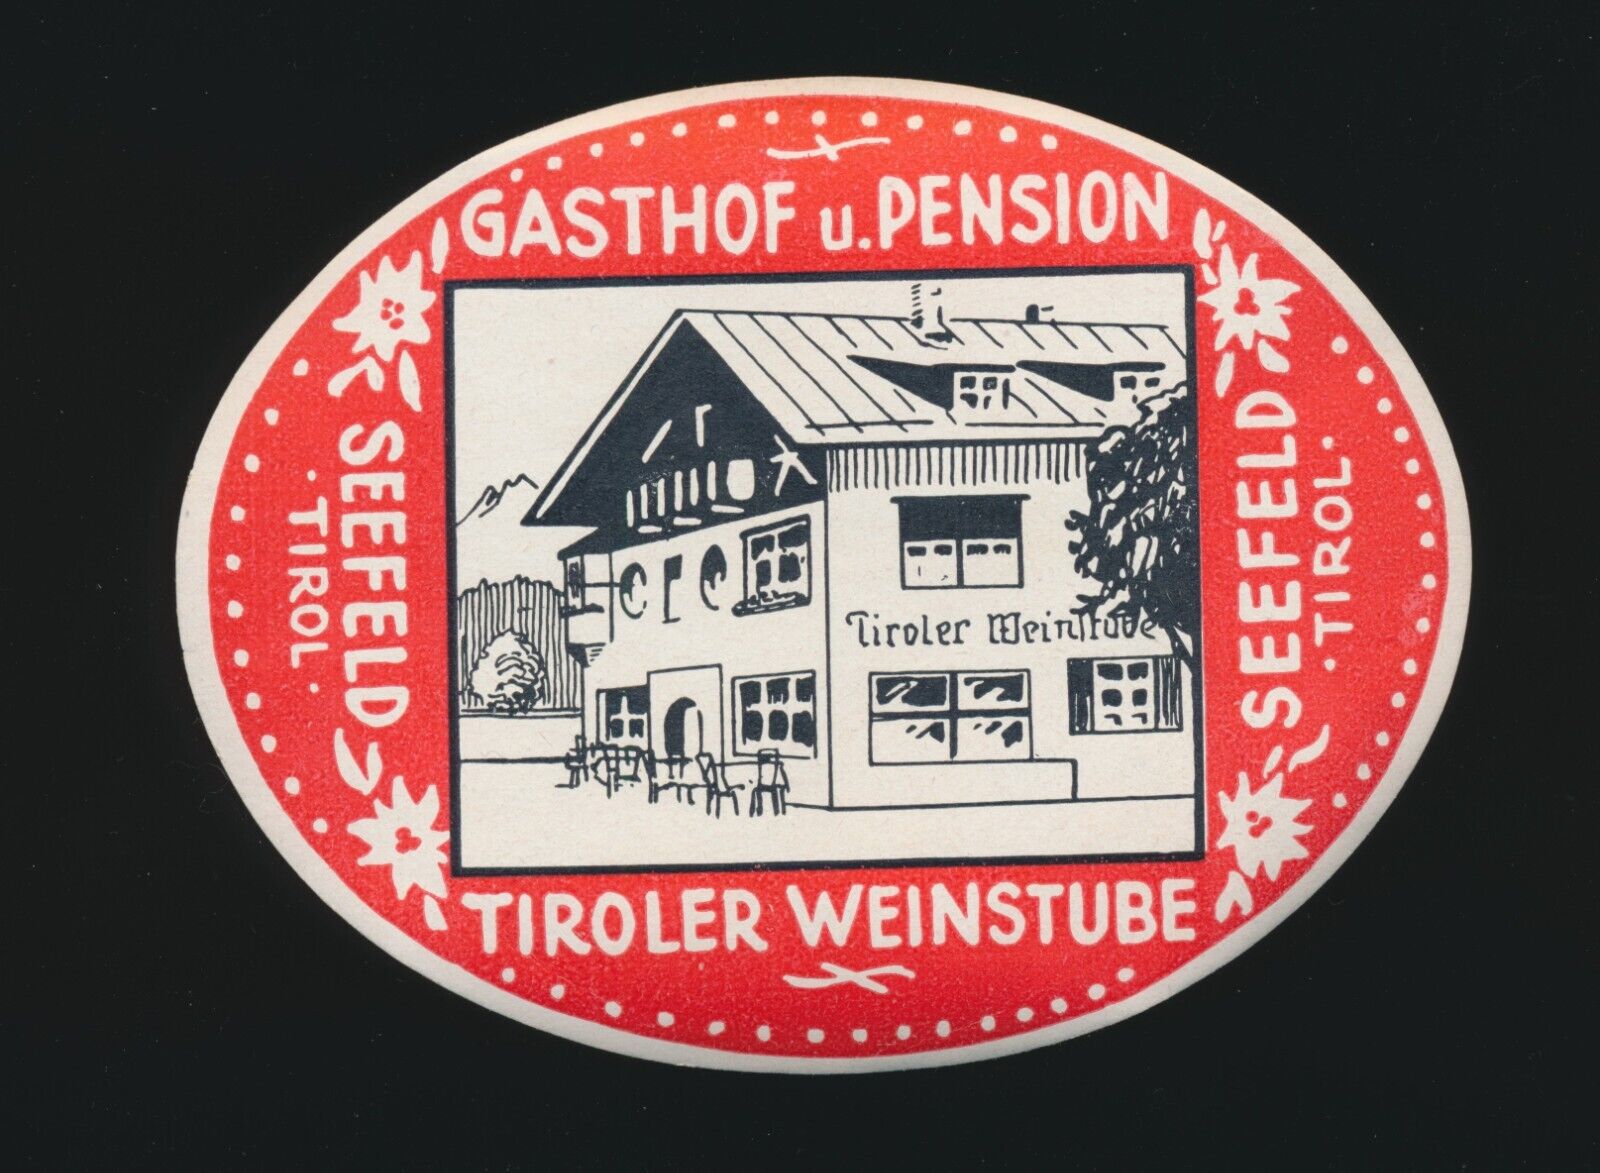 Vintage Gasthof Pension Tiroler Weinstube Seefeld, Tirol, Austria Luggage Label